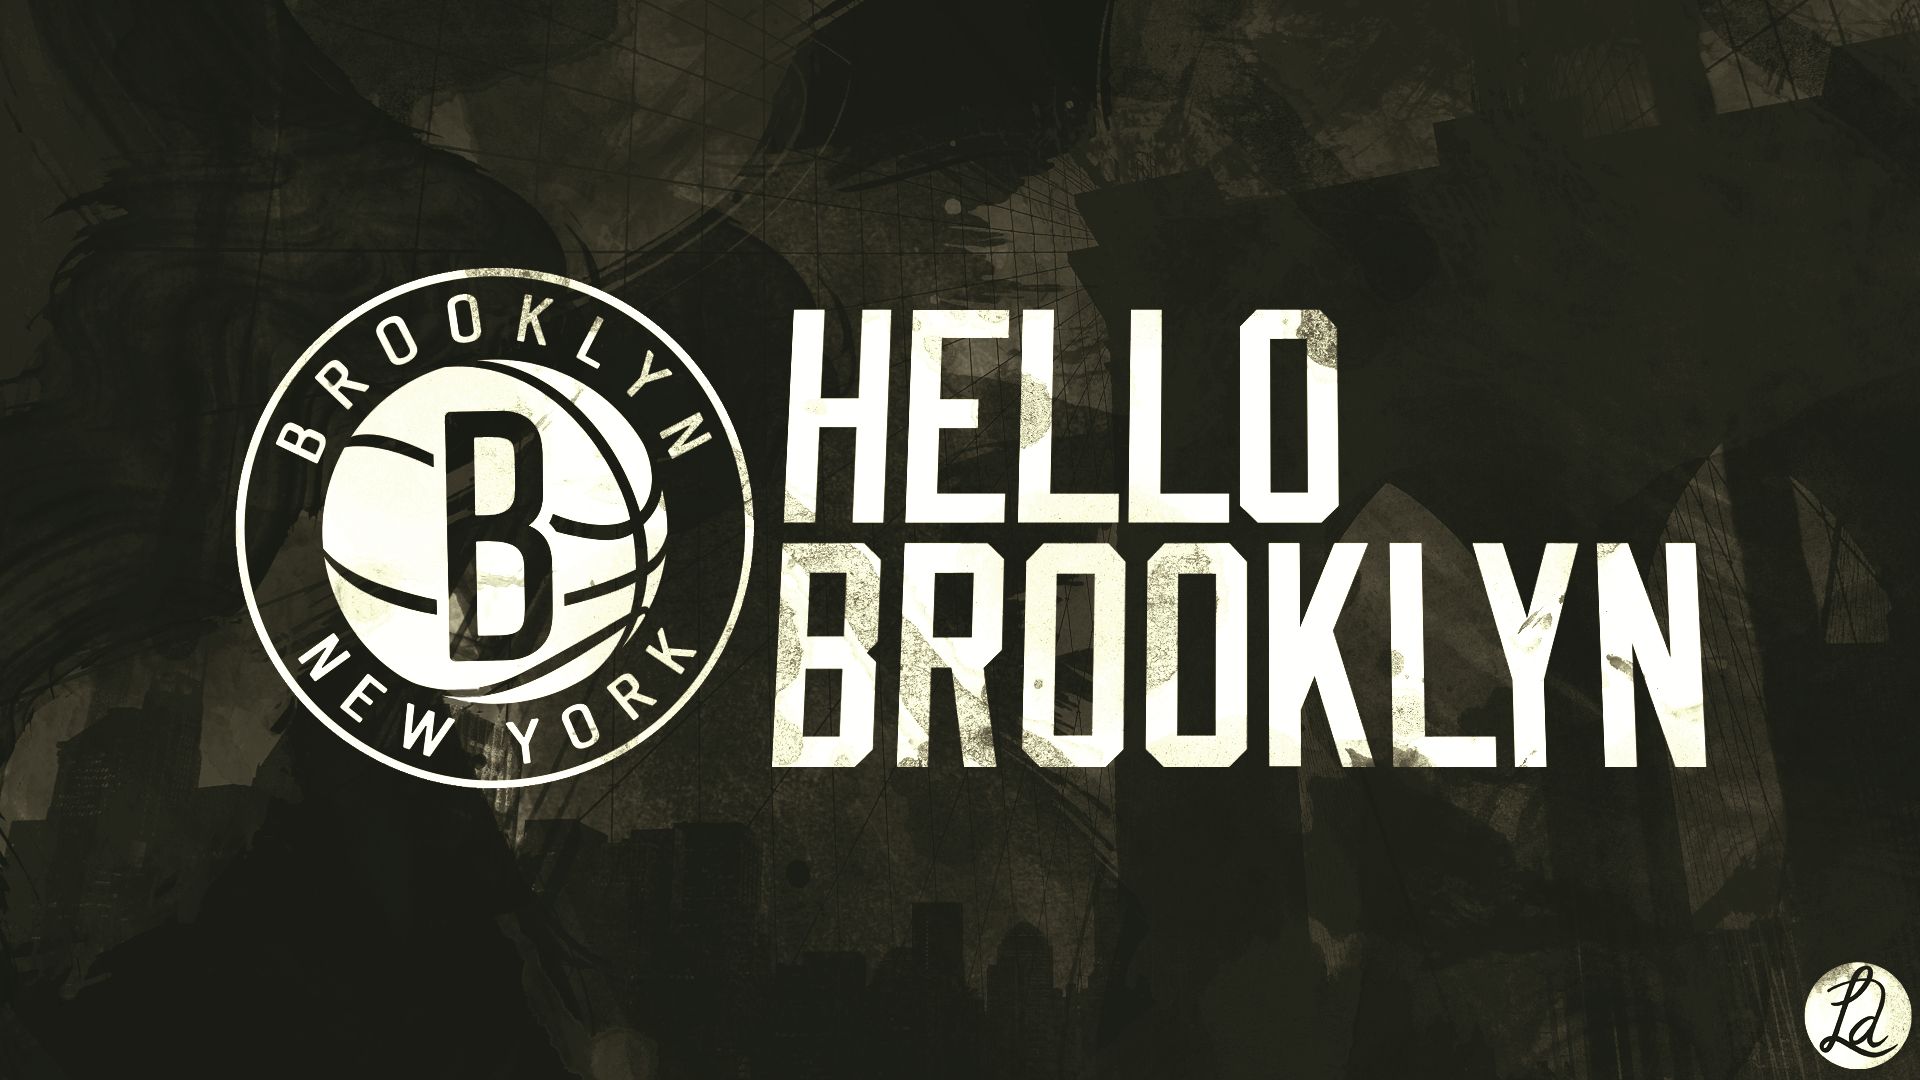 Brooklyn Nets Wallpapers - Top 25 Best Brooklyn Nets Backgrounds Download